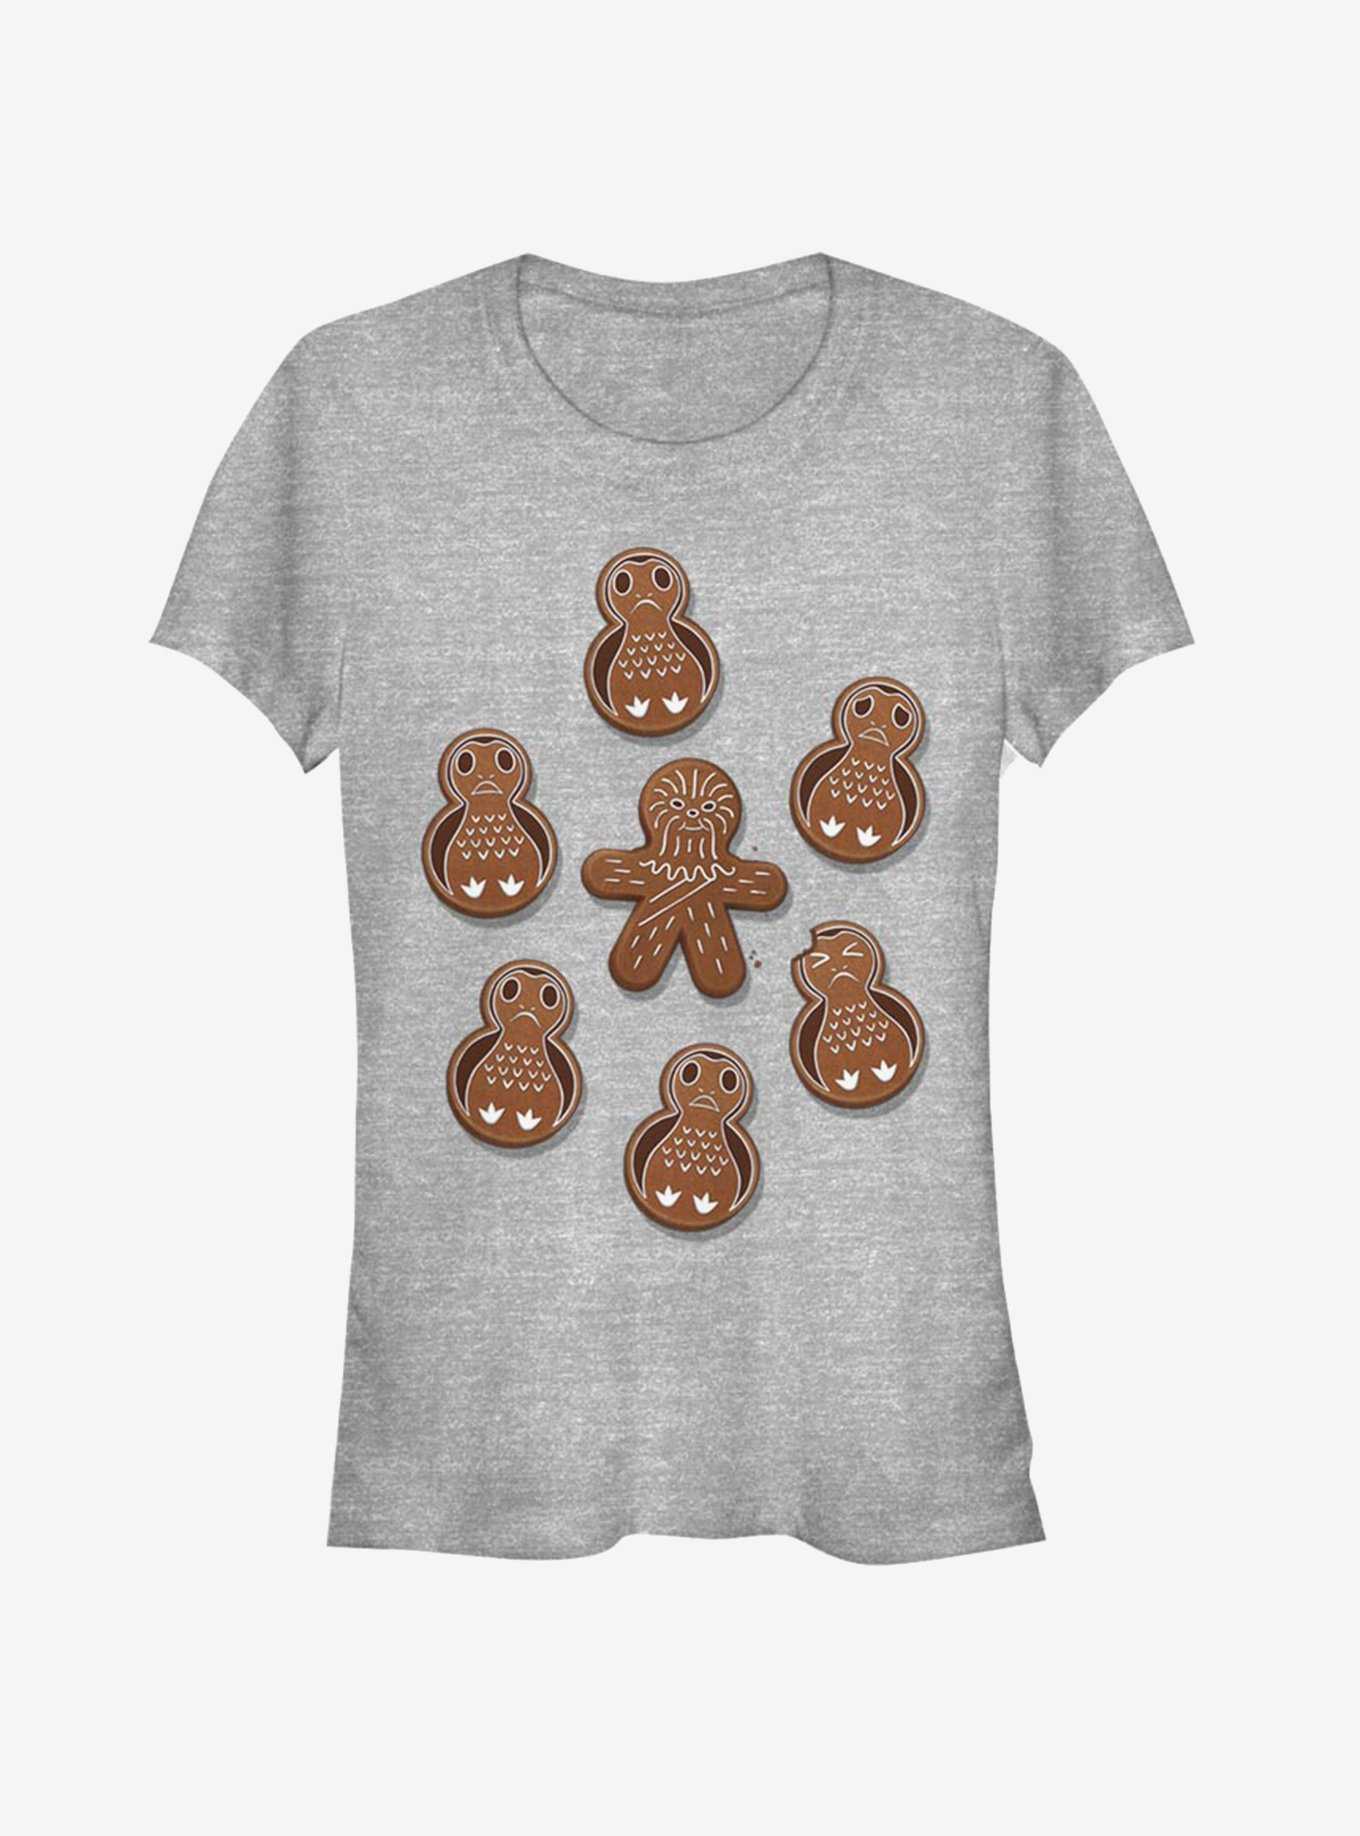 Star Wars Gingerman Porg Christmas Cookies Girls T-Shirt, , hi-res